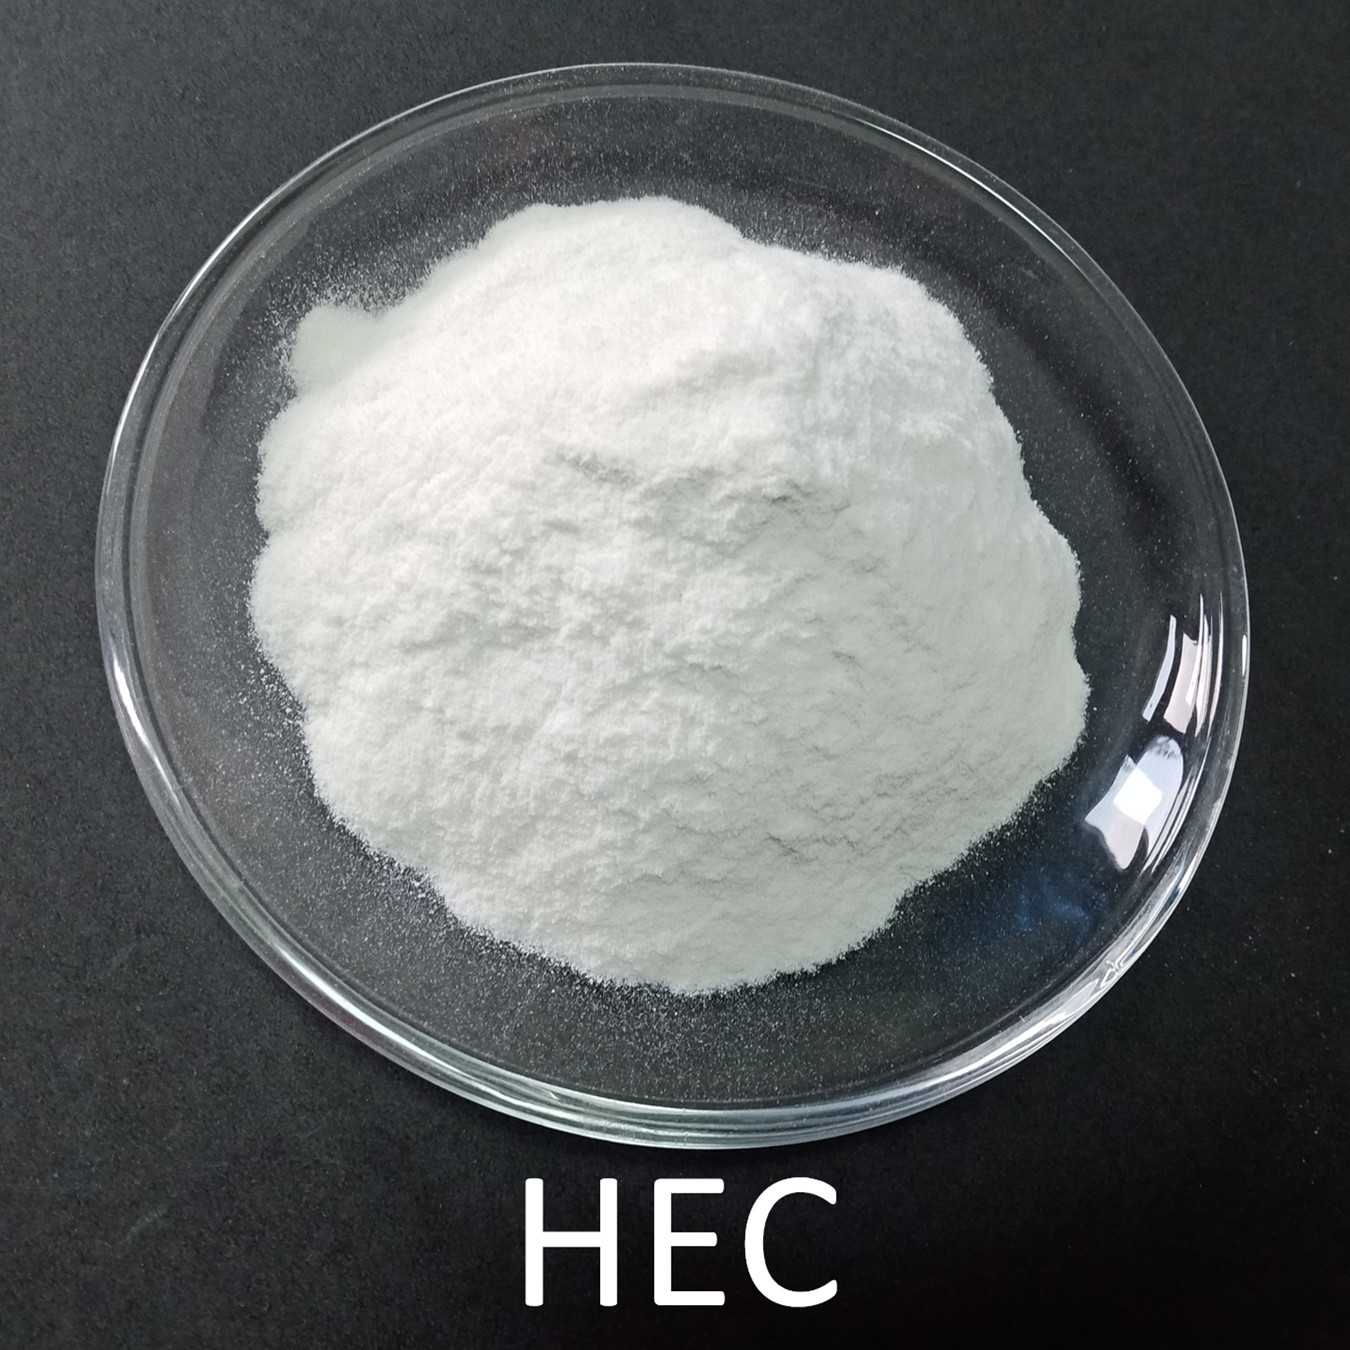 HEC Hydroxyethyl Cellulose Suppliers Picha Iliyoangaziwa